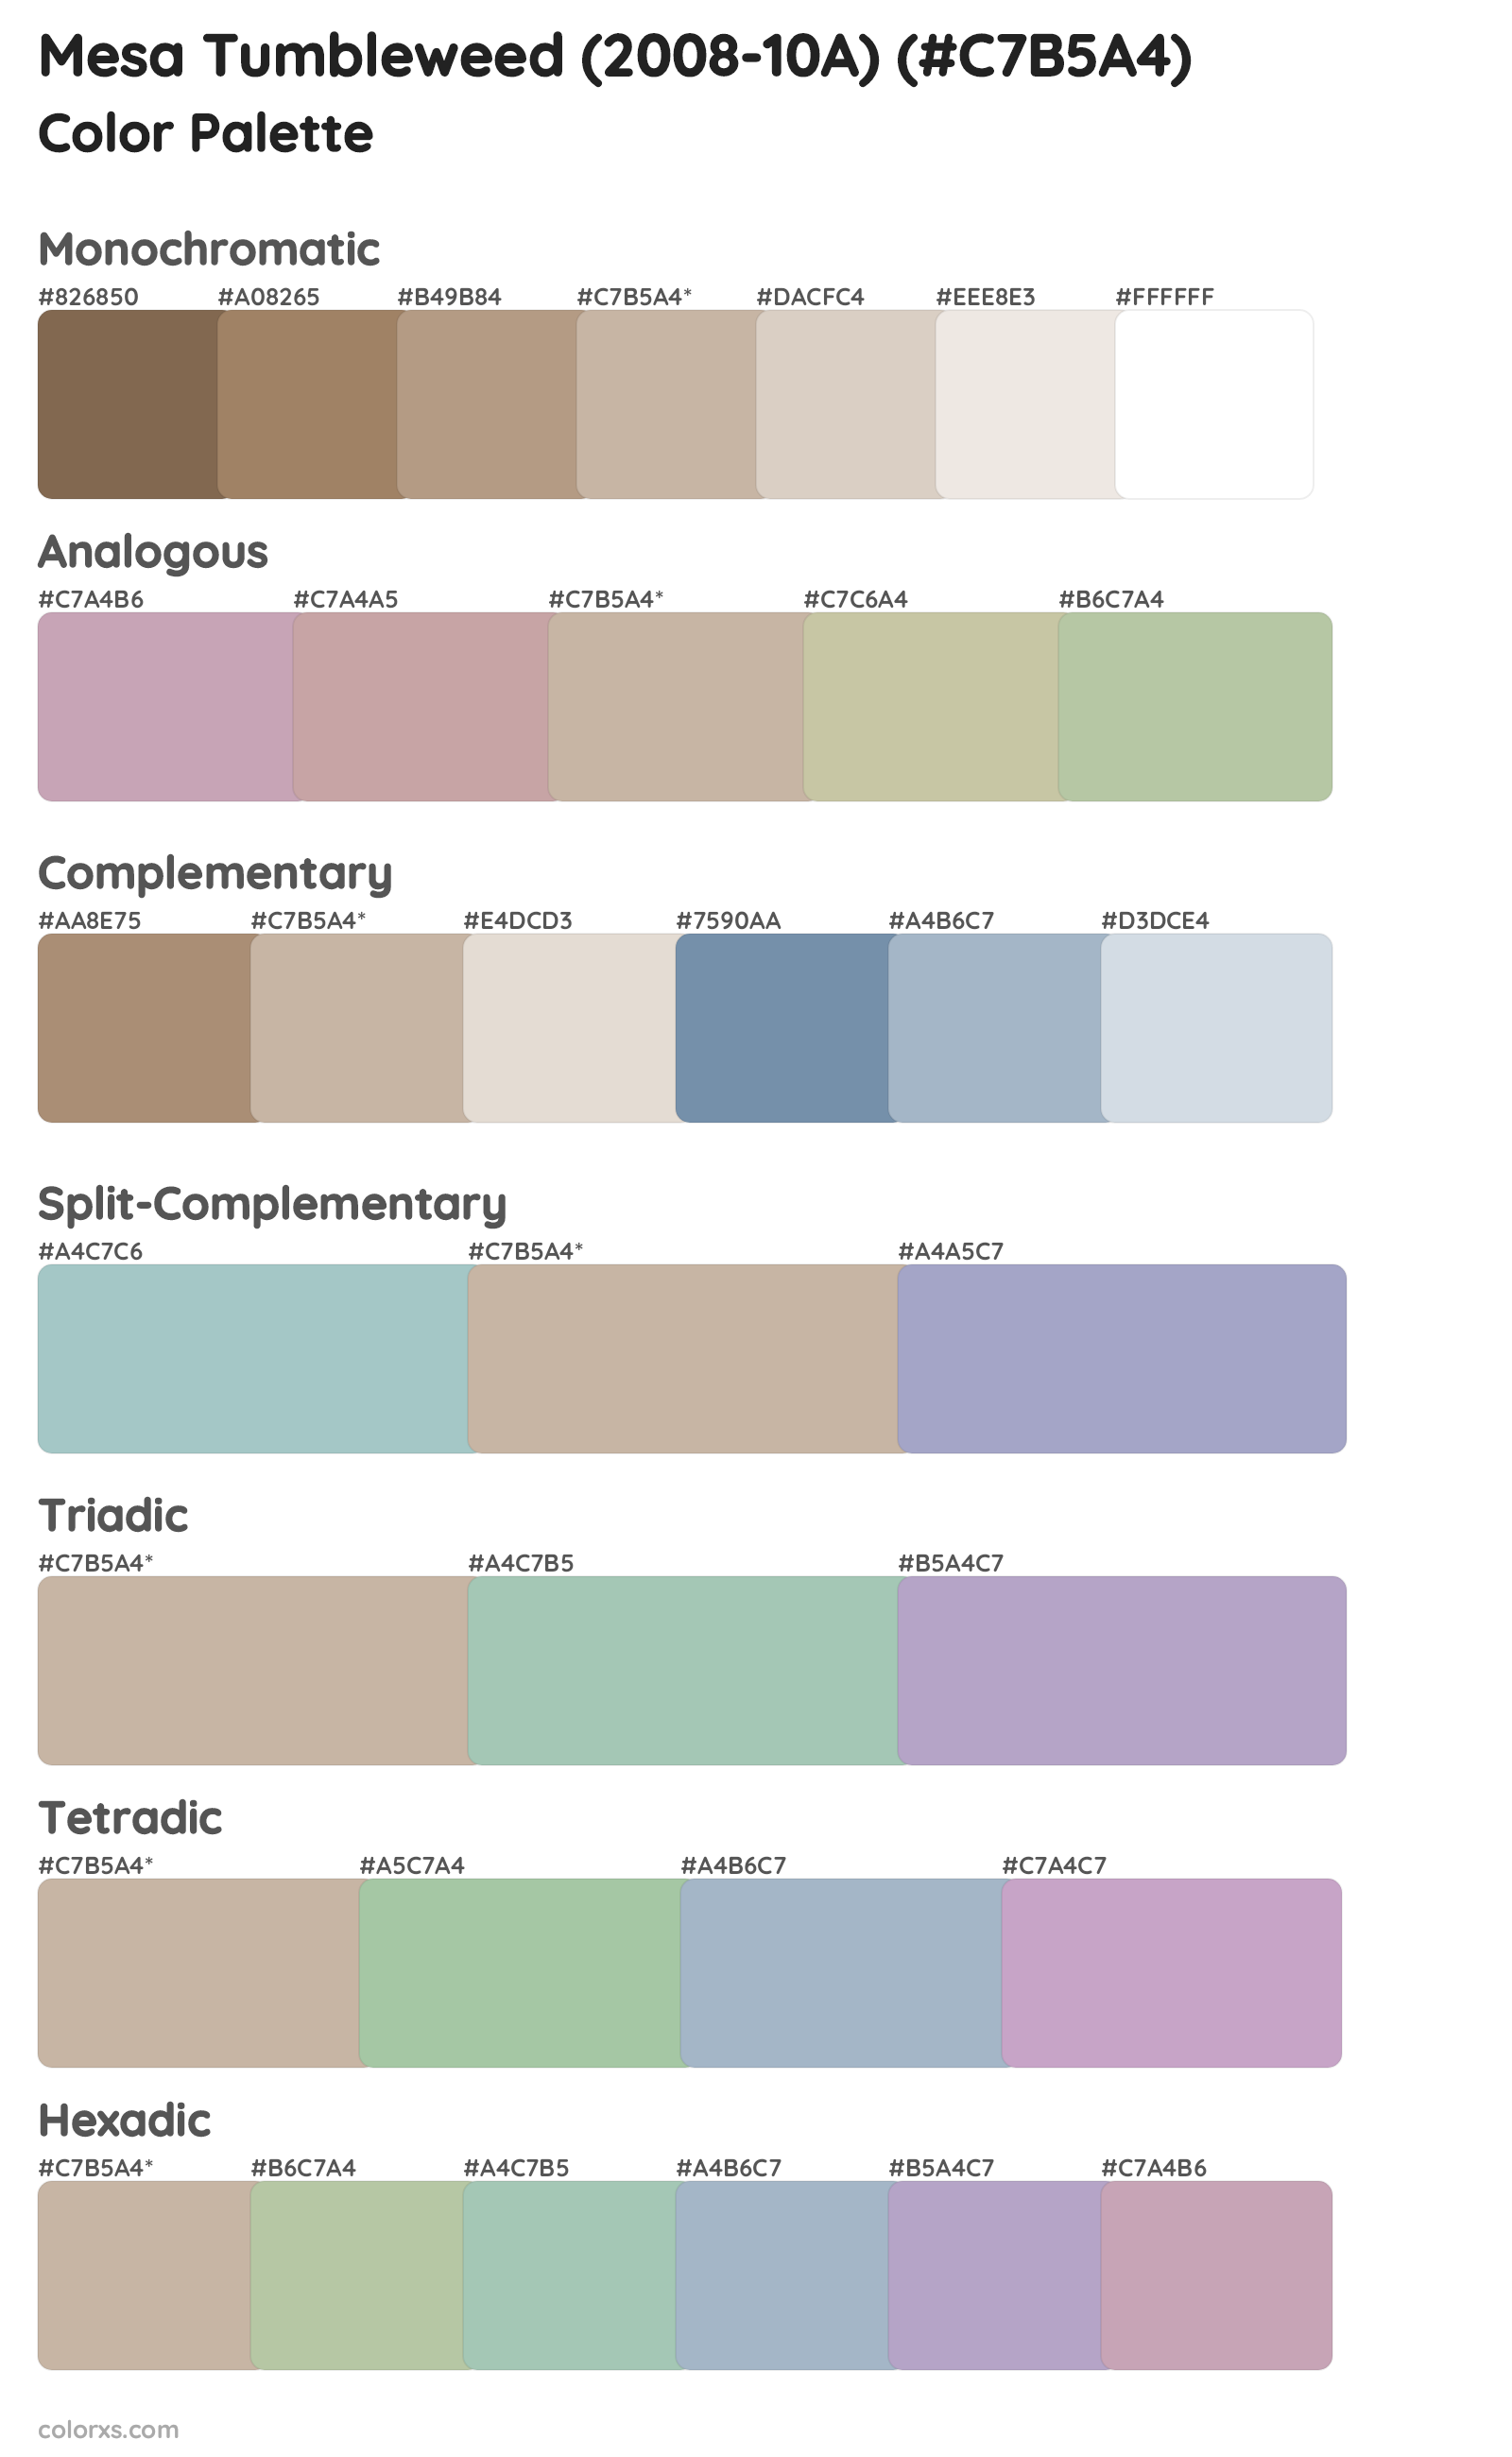 Mesa Tumbleweed (2008-10A) Color Scheme Palettes